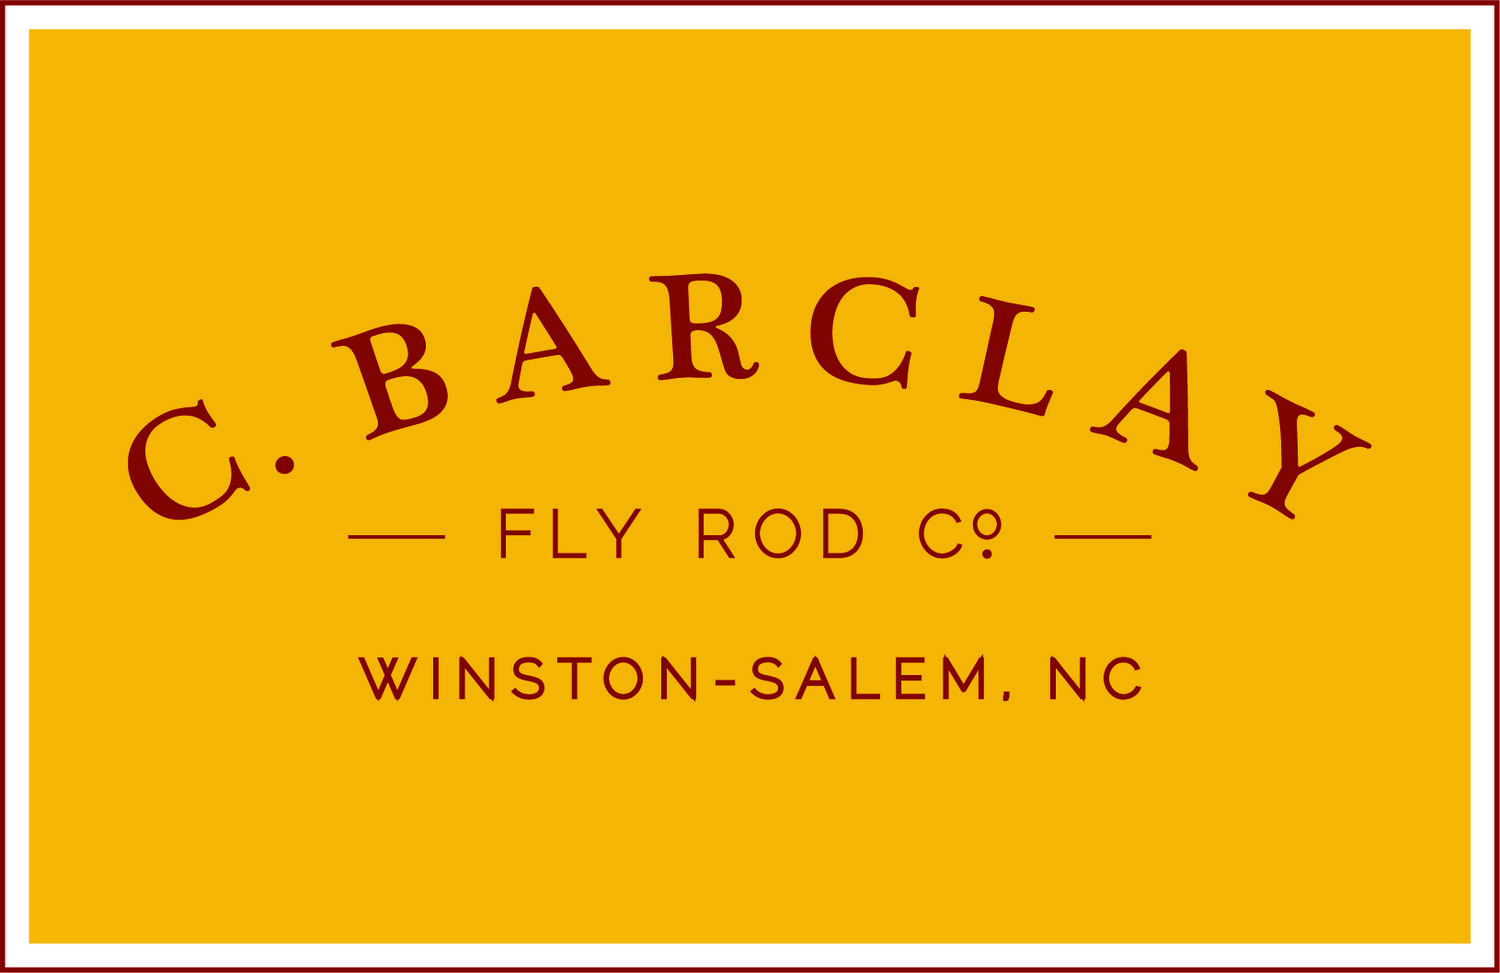 C. Barclay Fly Rod Co.